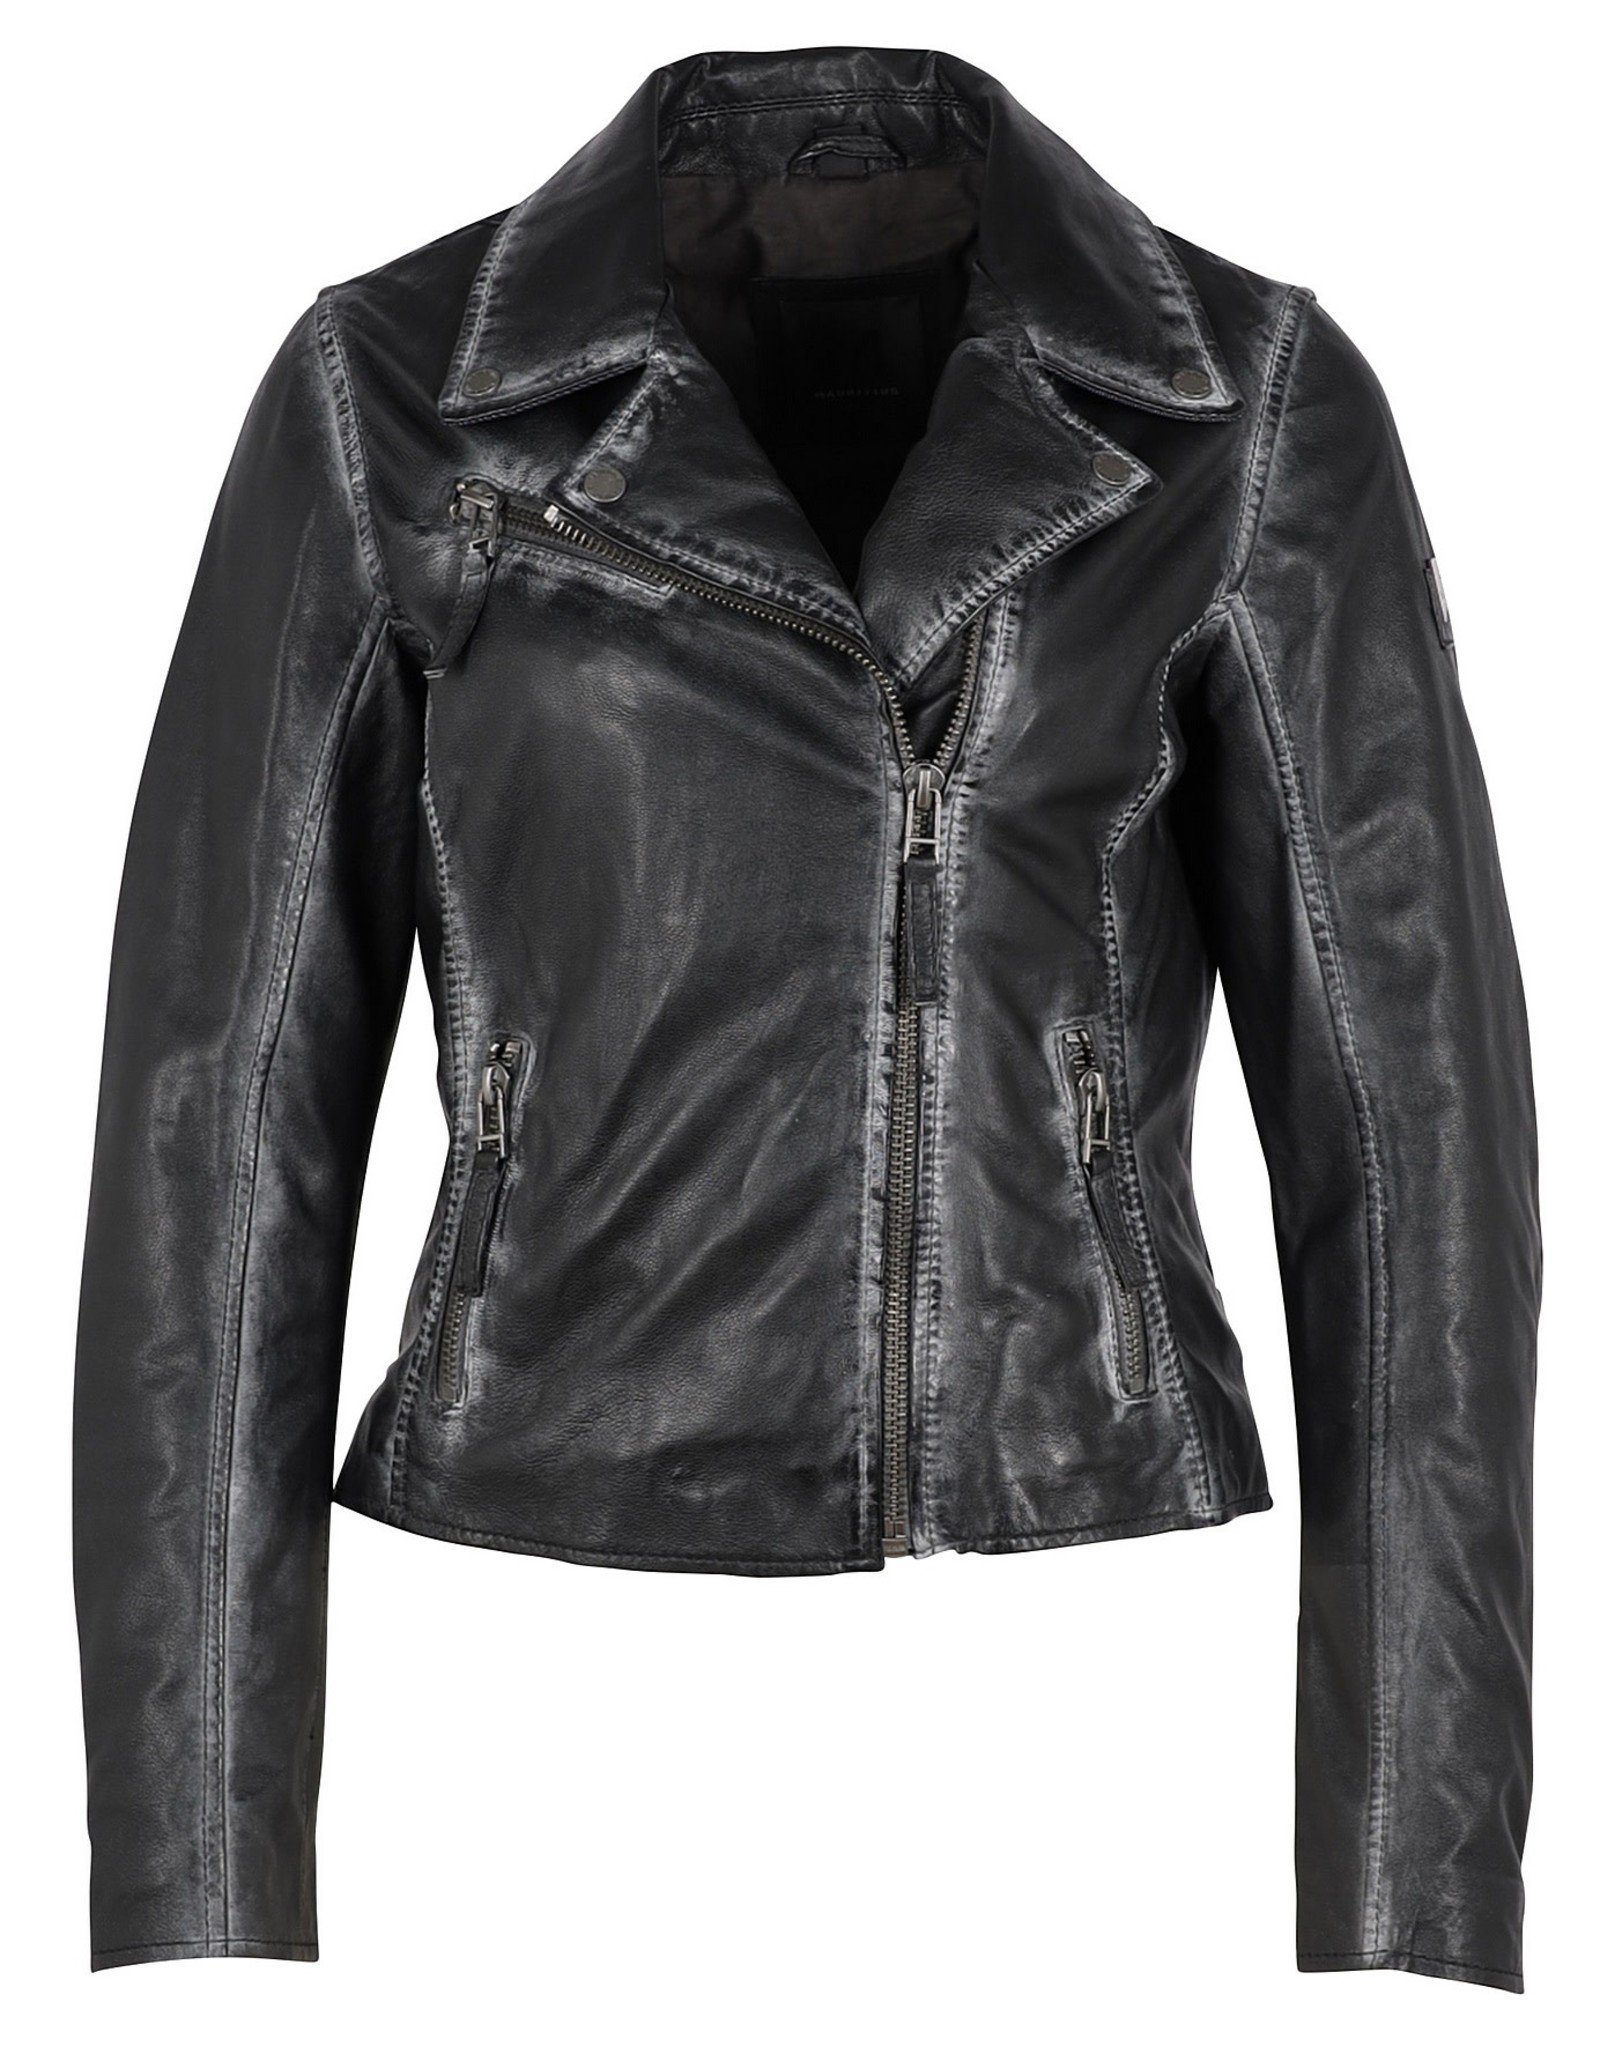 Mauritius Christy Leather Jacket Black Denim Stars - Lovebird Boutique